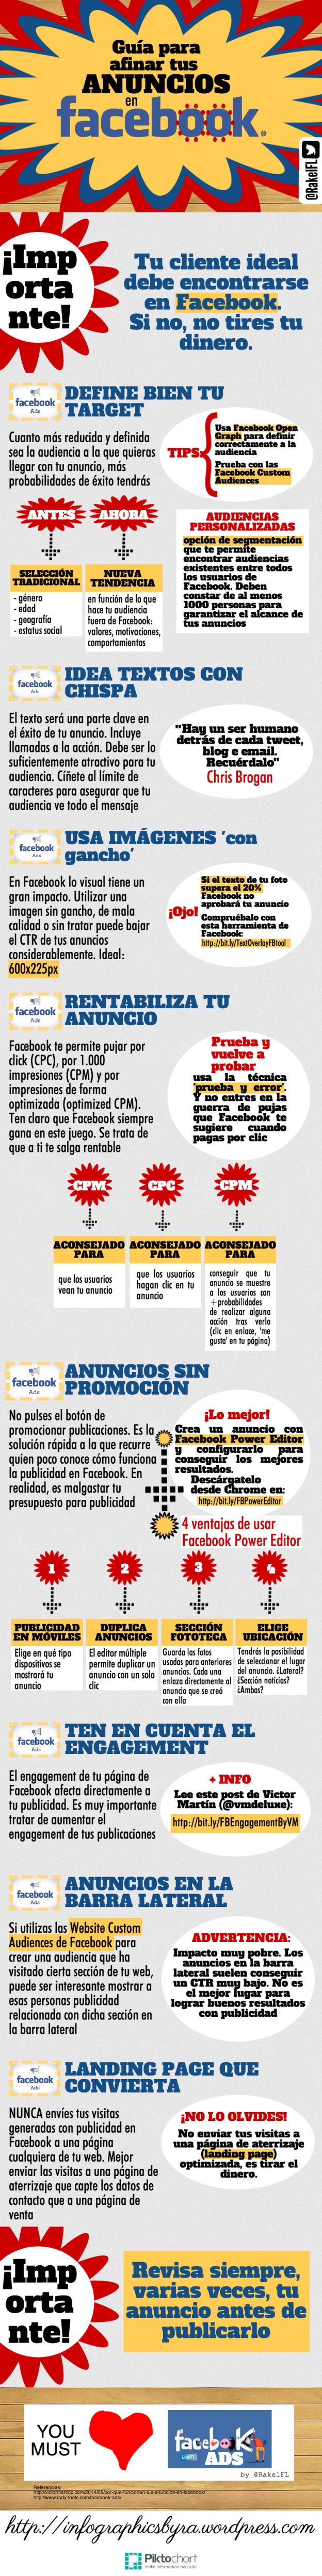 Advertising-Infographics-Guia-para-afinar-tus-anuncios-en-Facebook Advertising Infographics : Guía para afinar tus anuncios en Facebook Ads #infografia #infographic #socialmedia